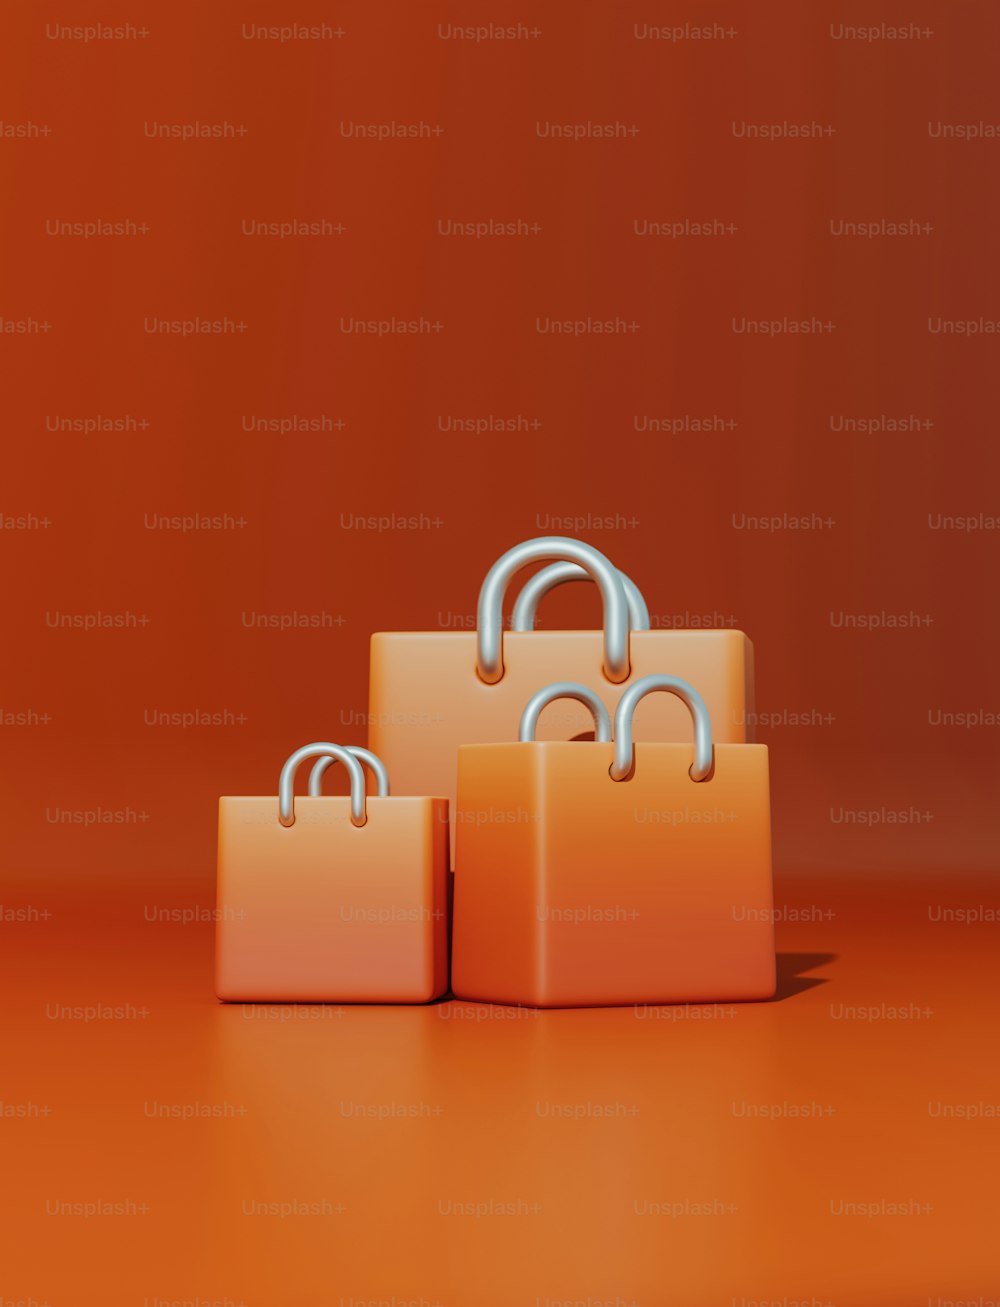 three orange shopping bags sitting on top of an orange surface